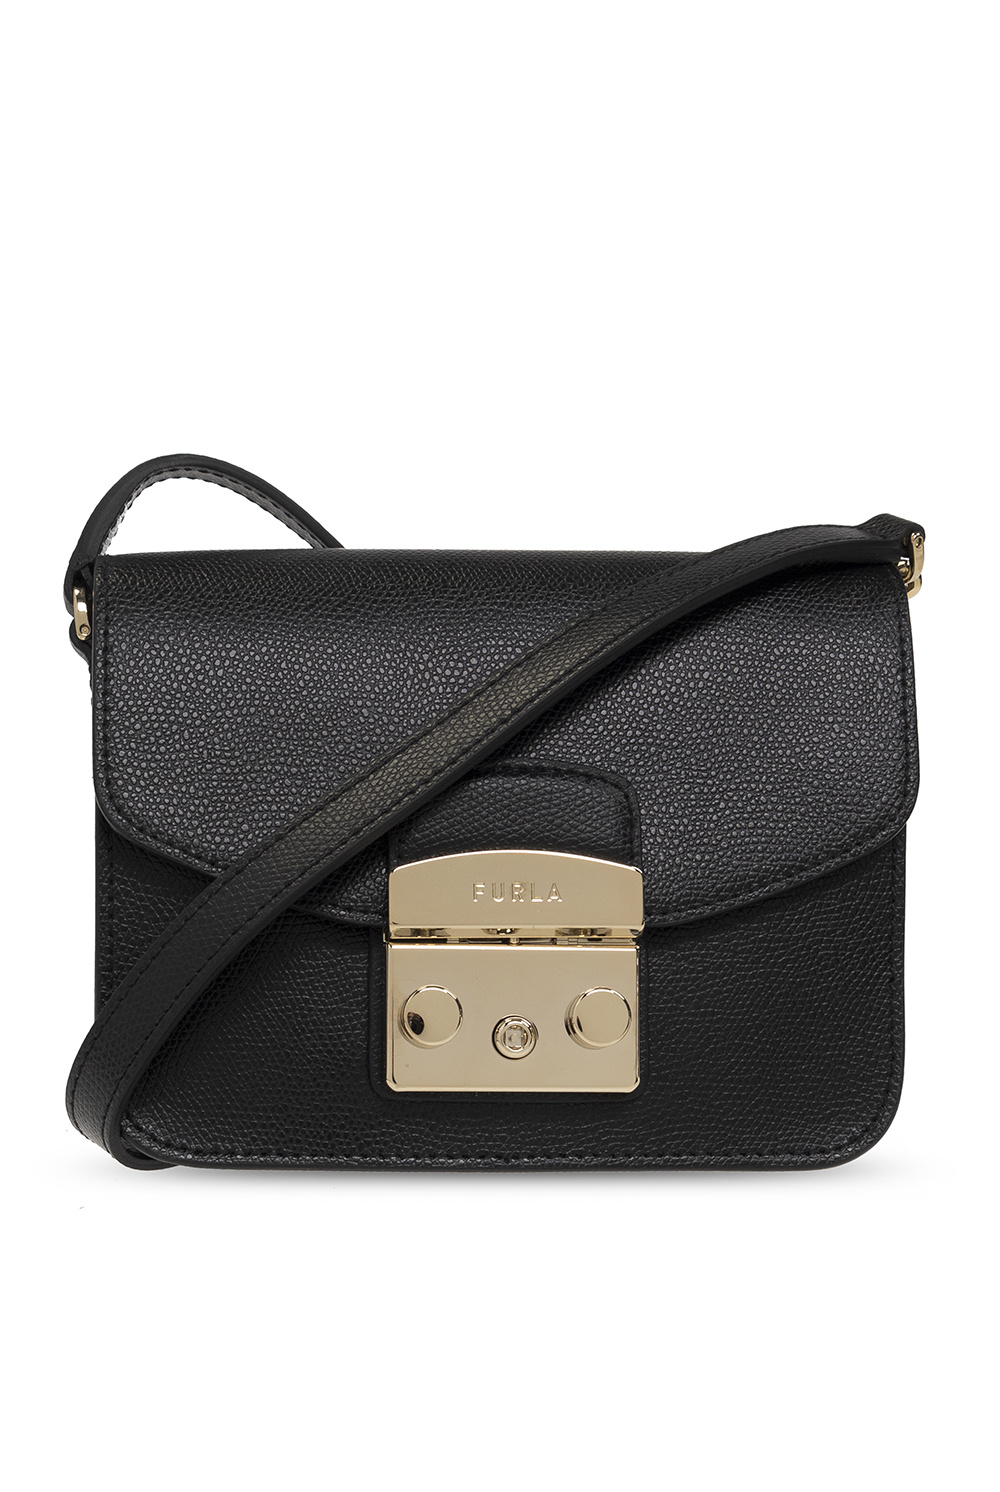 Furla Bella Mini Embellished Leather Top Handle Bag in Black